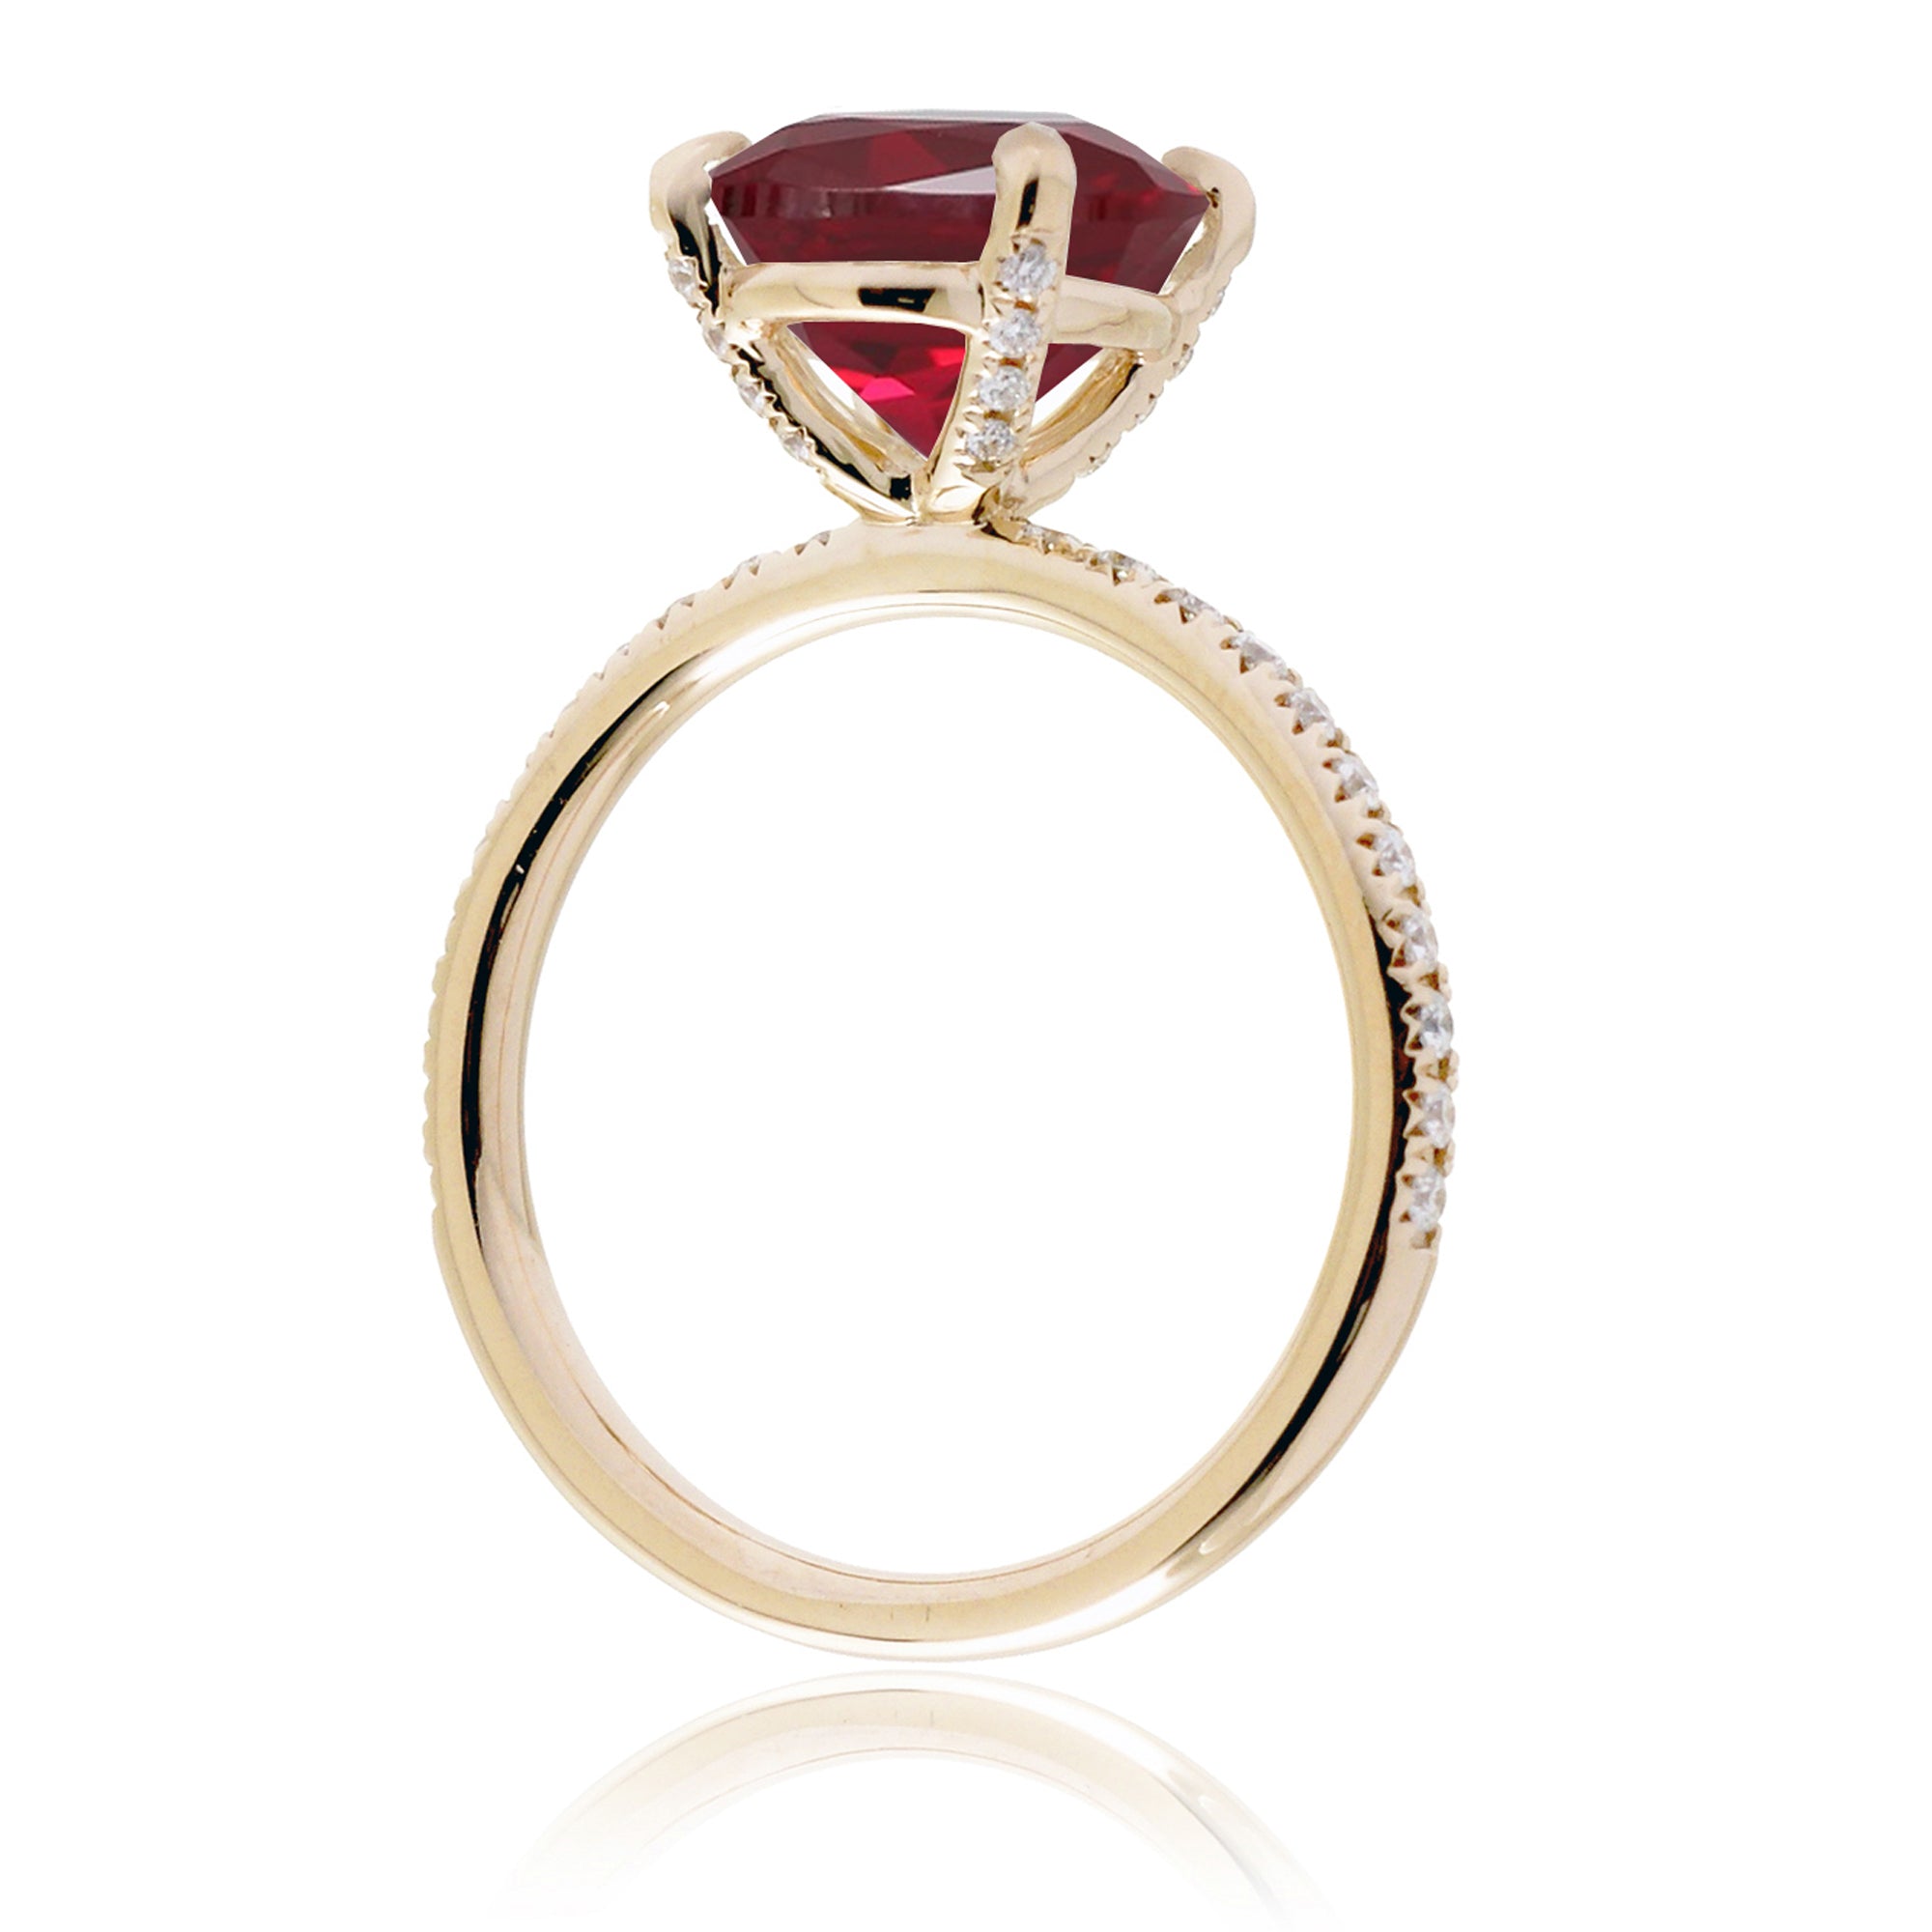 Cushion cut ruby diamond engagement ring yellow gold - the Ava